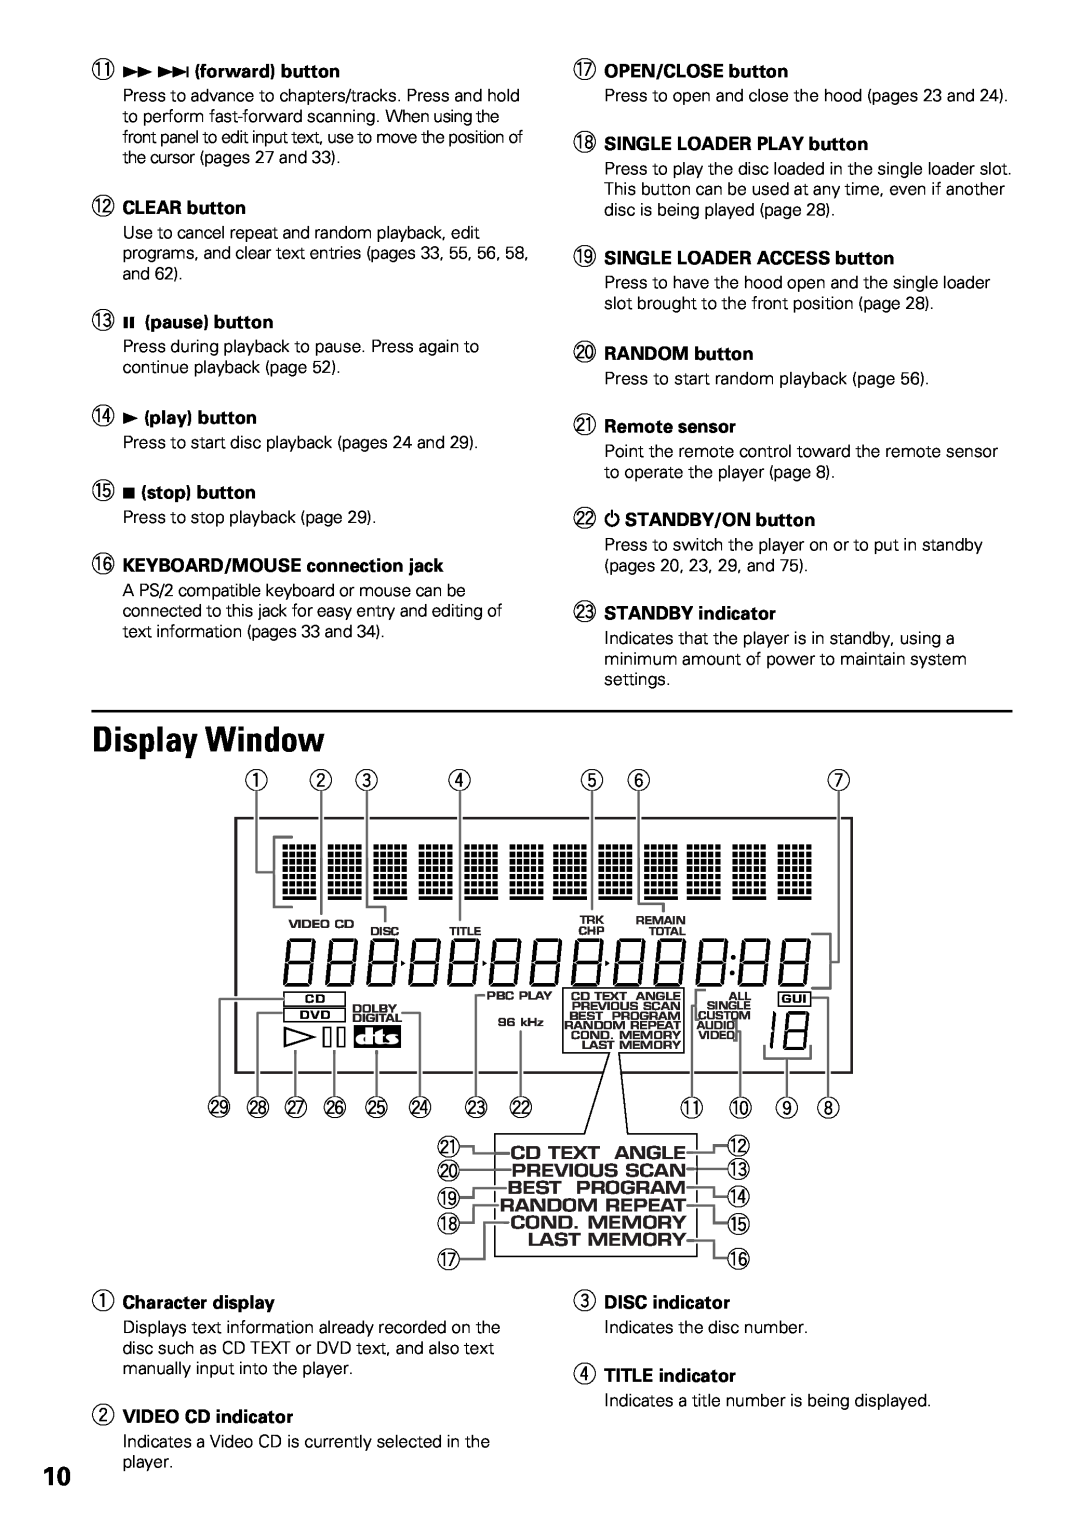 Pioneer DV-F07 Display Window, ¢£ª Á+, Á ¢ forward button, = CLEAR button, ~ 8 pause button, play button, @ 7 stop button 